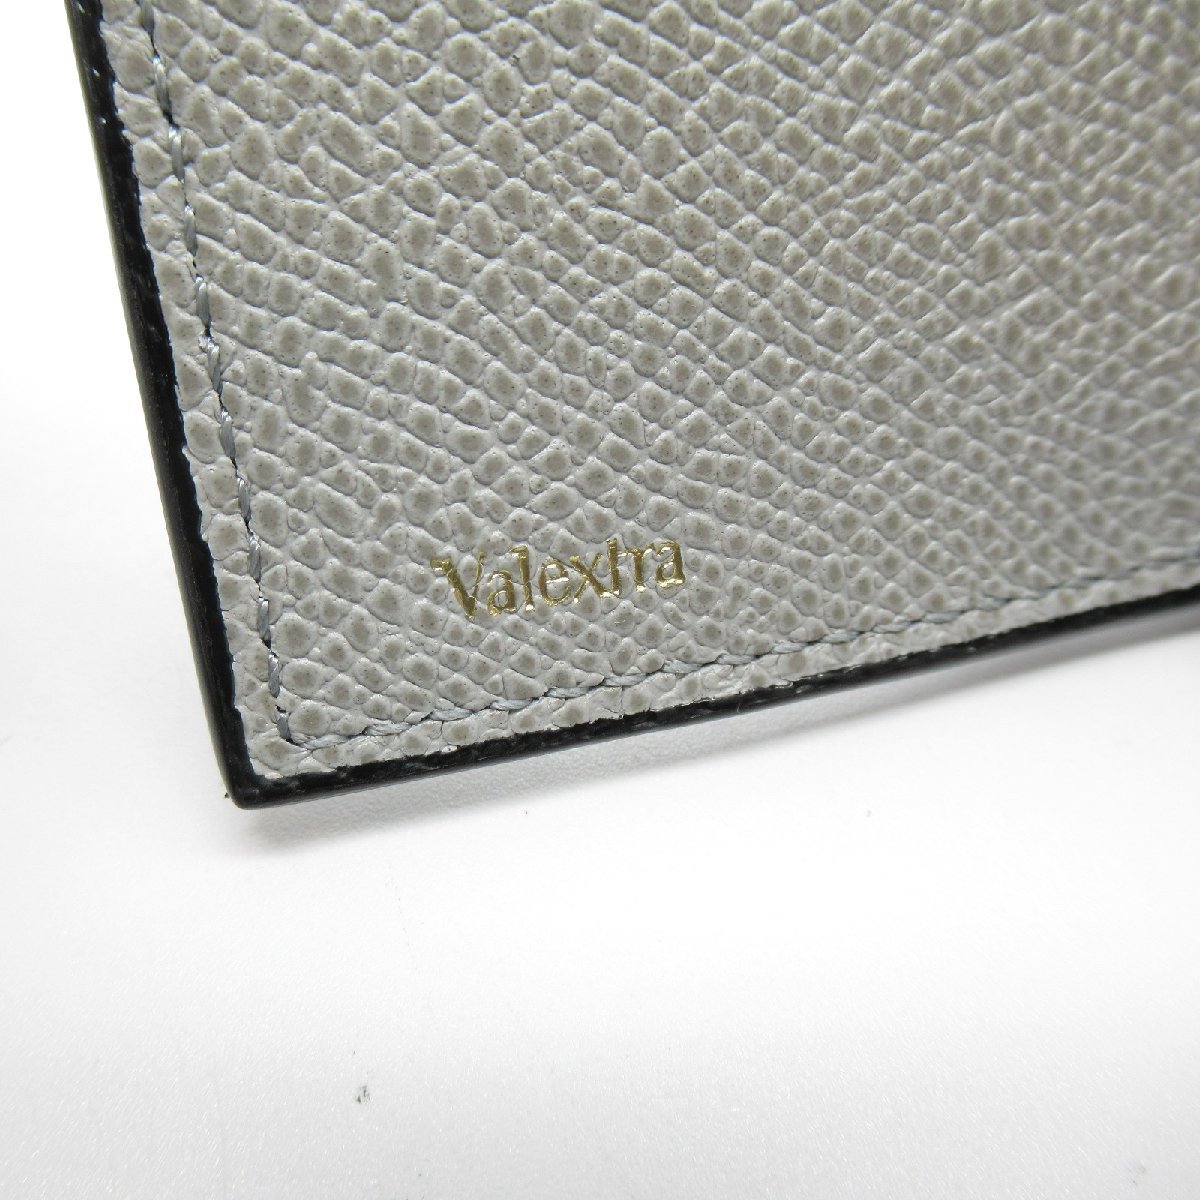 Valextra ヴァレクストラ 三つ折り財布 三つ折り財布 グレー系 レザー